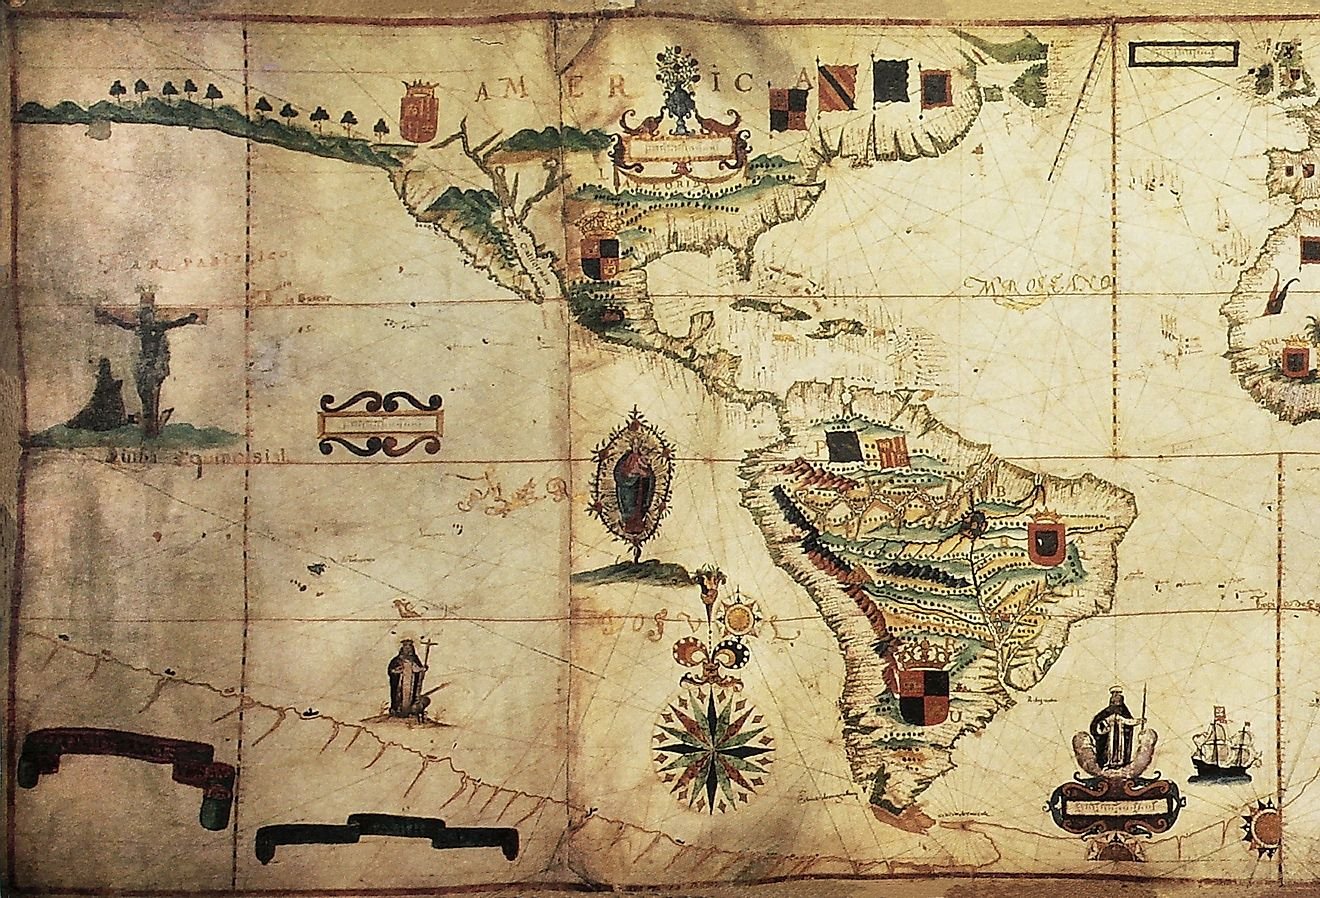 The Portuguese Colonization of the Americas